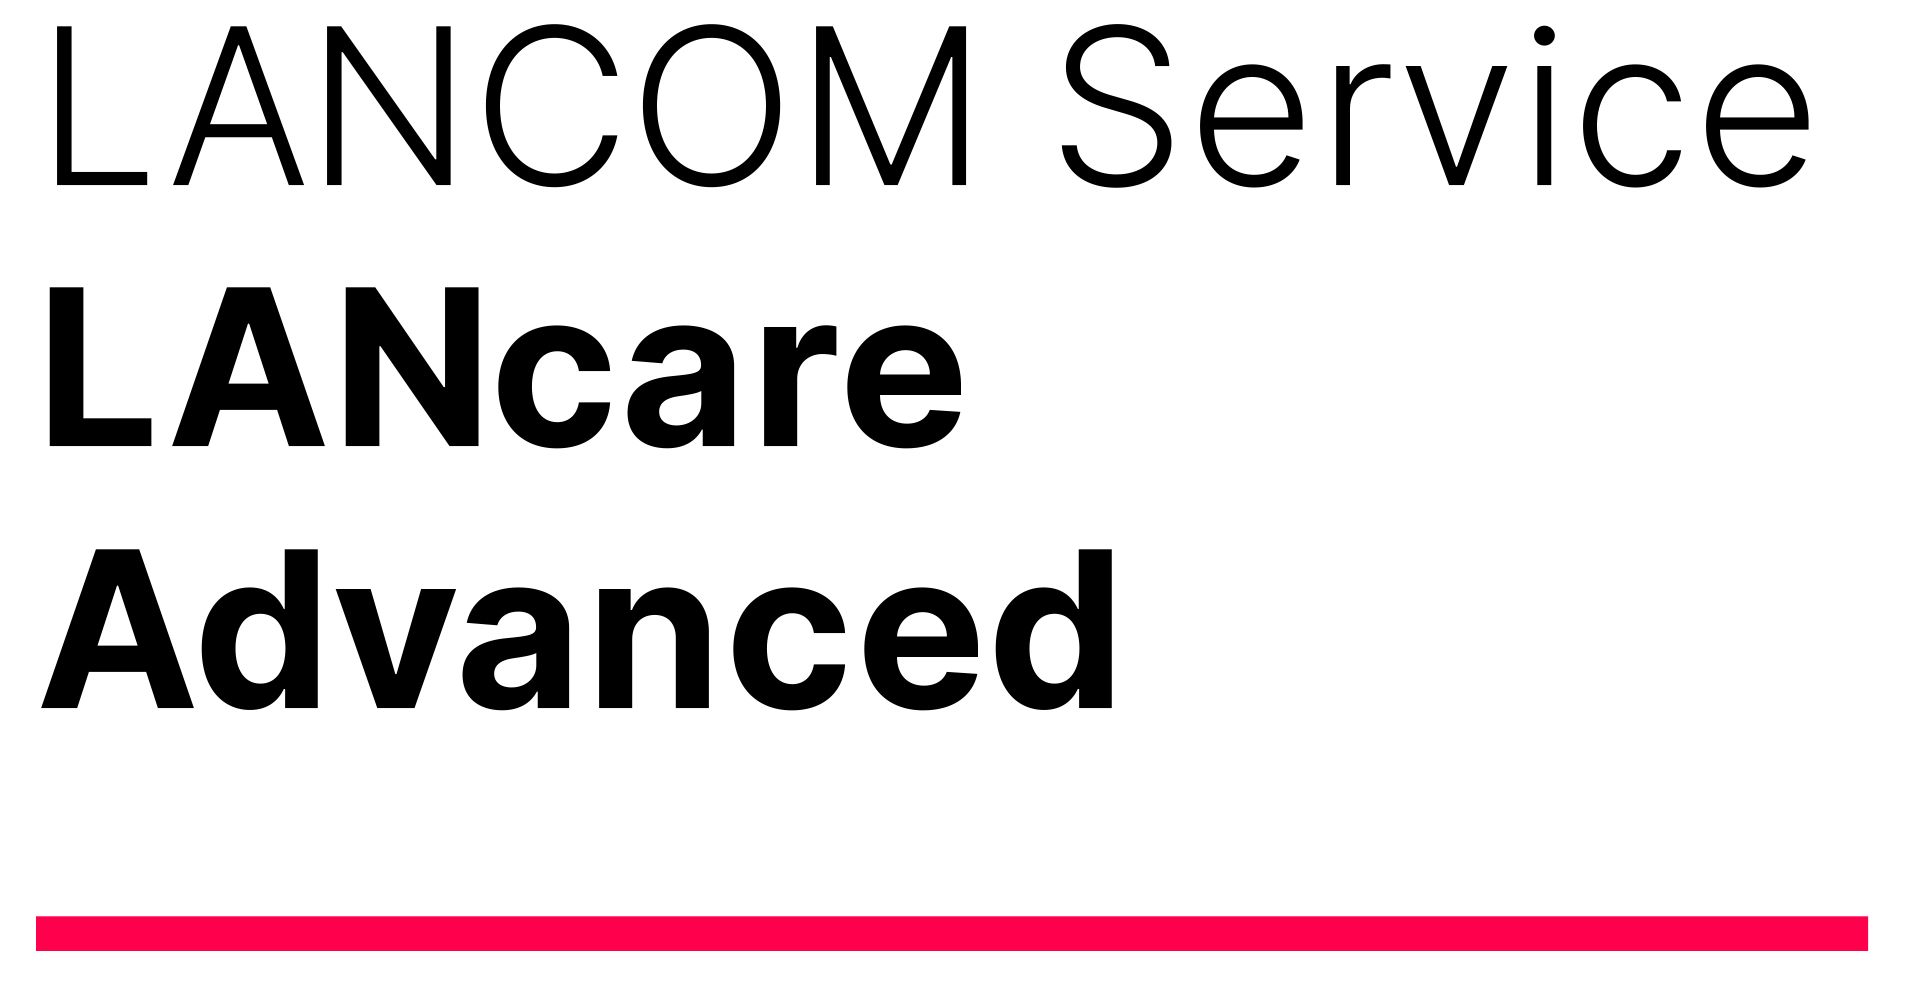 Lancom Service LANcare Advanced S (ESD) +++ ESD, https://www.lancom-systems.de/registrierung_1